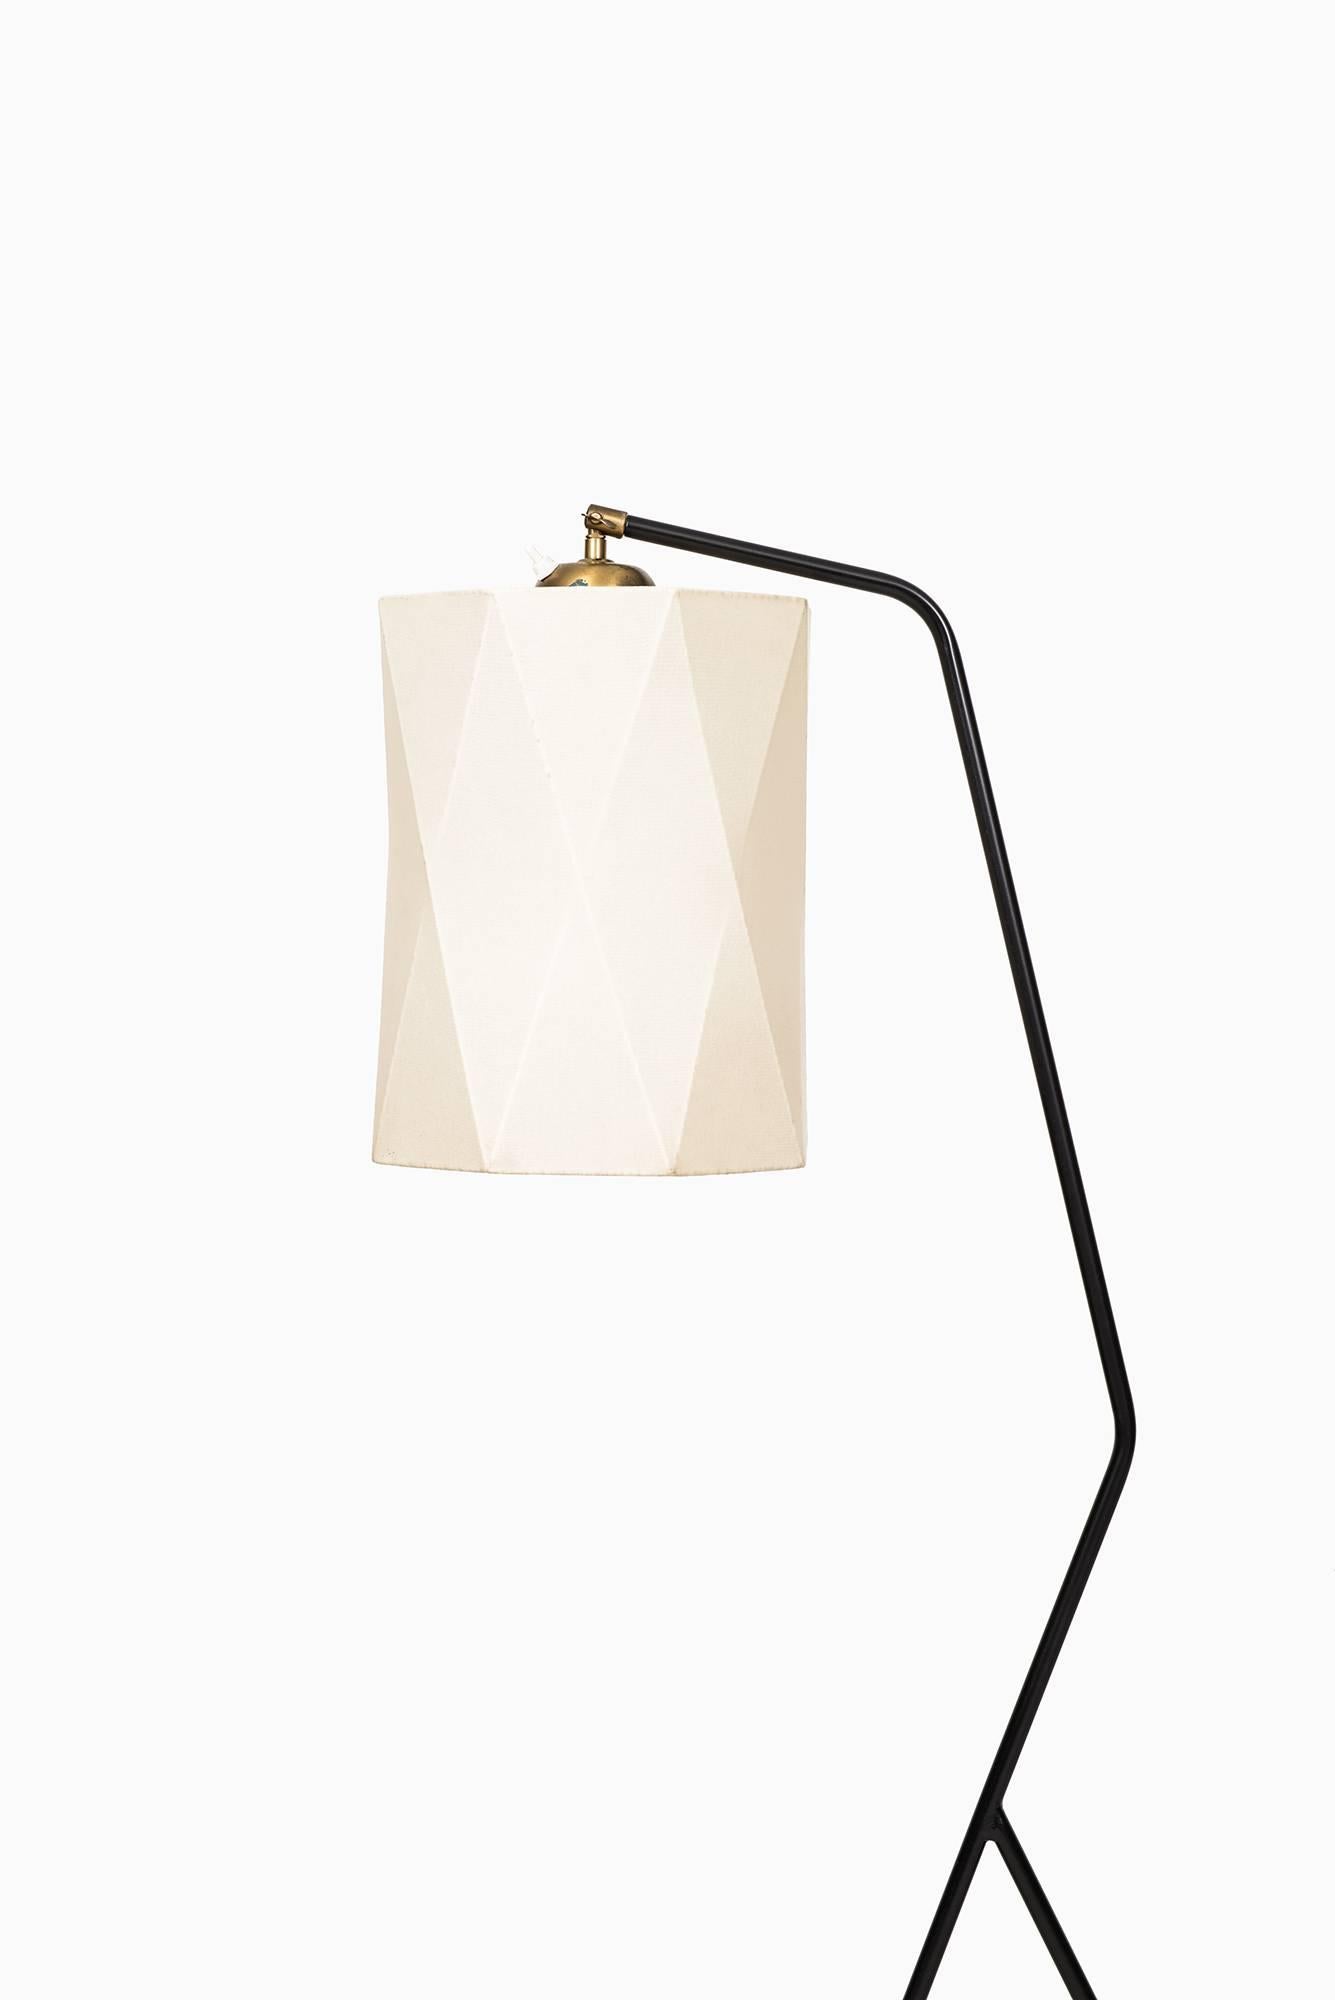 Scandinavian Modern Midcentury Floor Lamp with Harlequin Shade by Hans Bergström